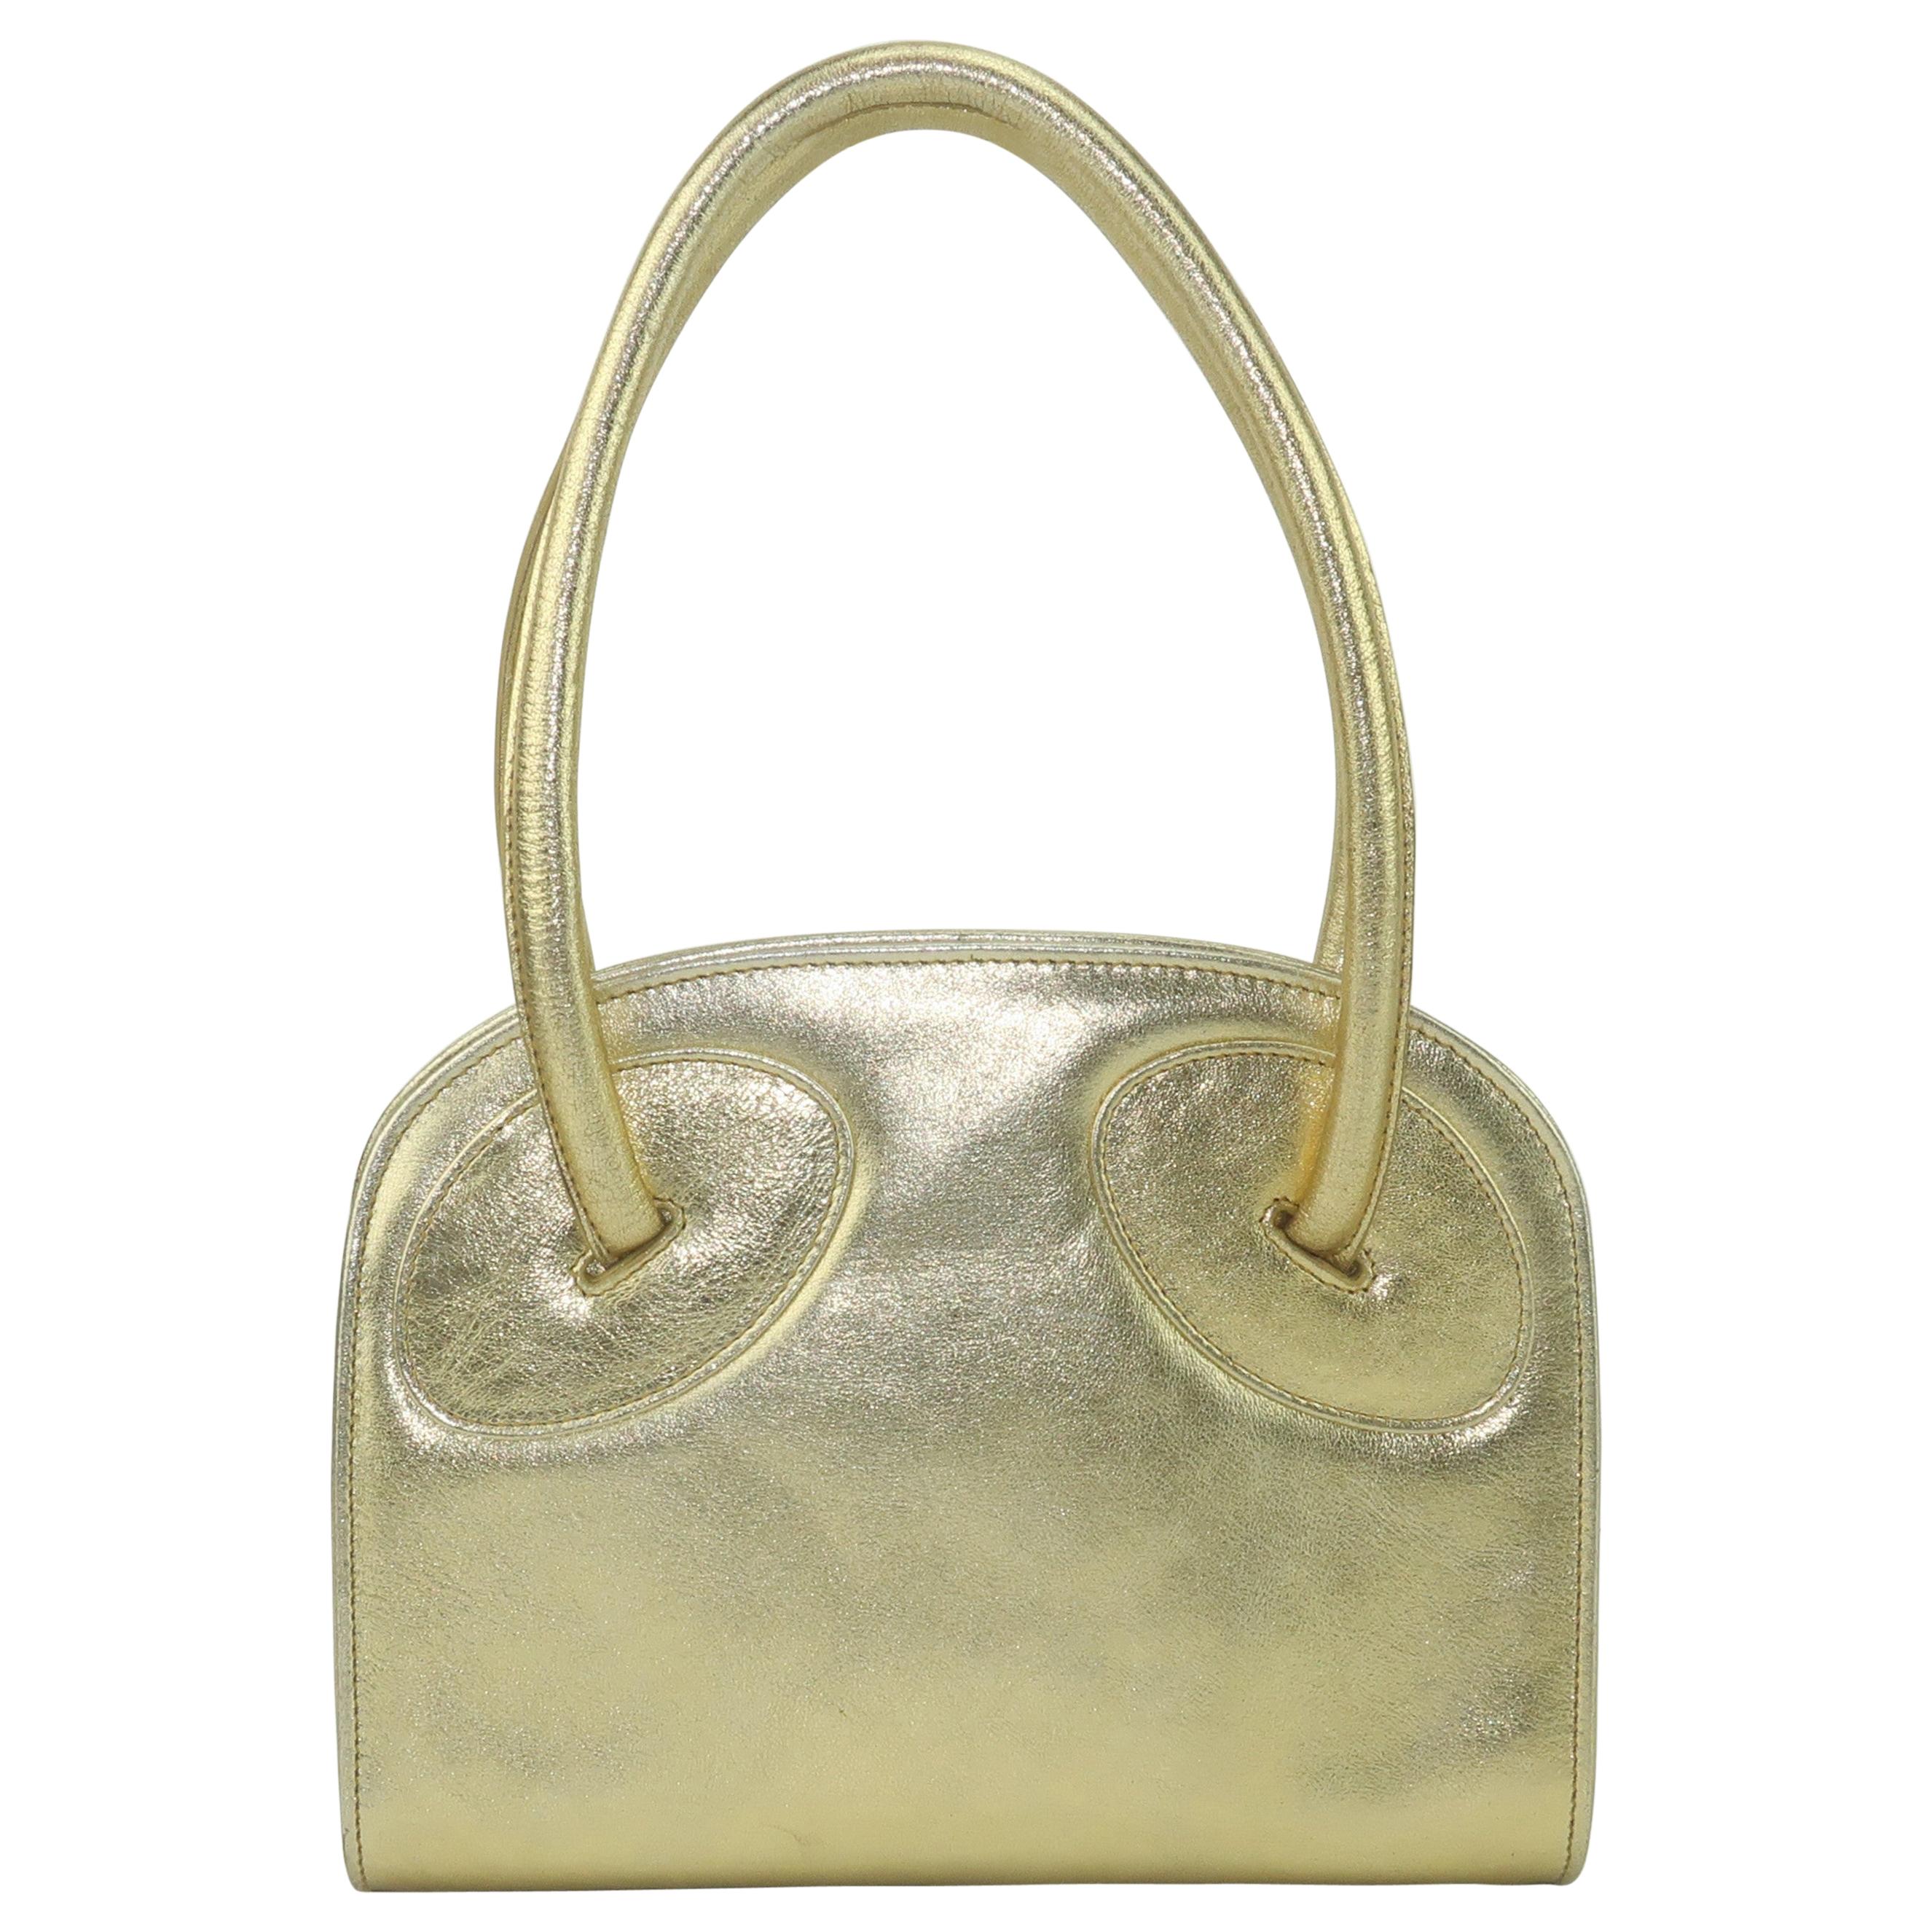 Laura Biagiotti Attributed Gold Leather Handbag, 1970's